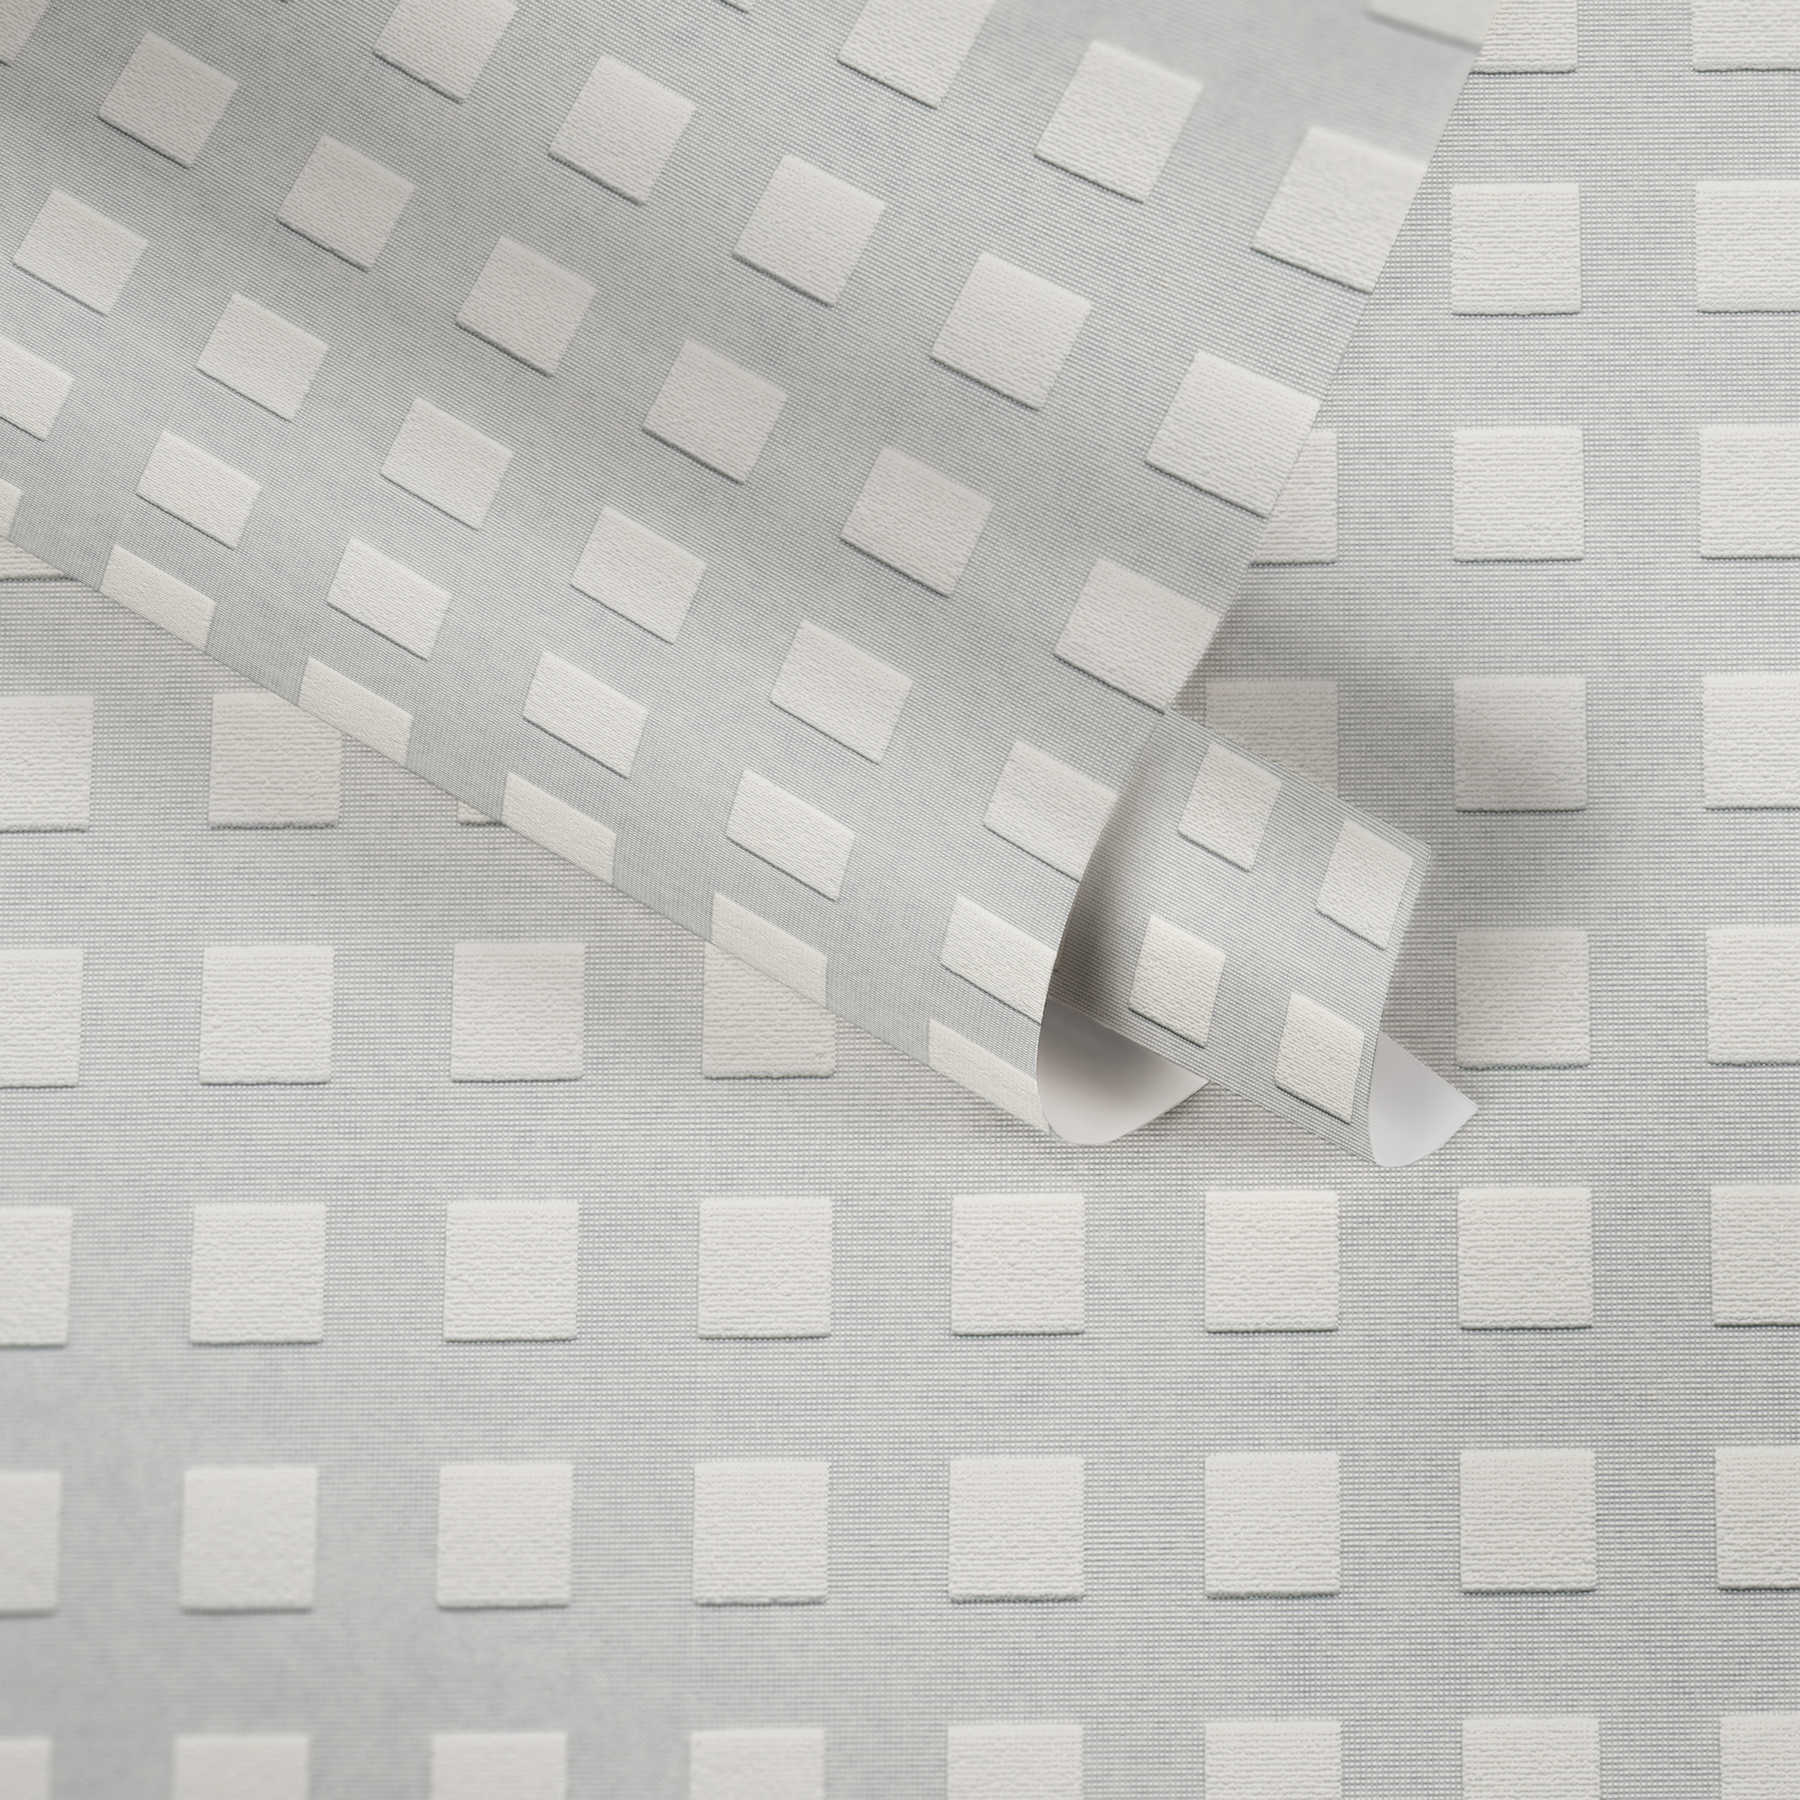             Carta da parati verniciabile con motivo cuboide 3D - Bianco
        